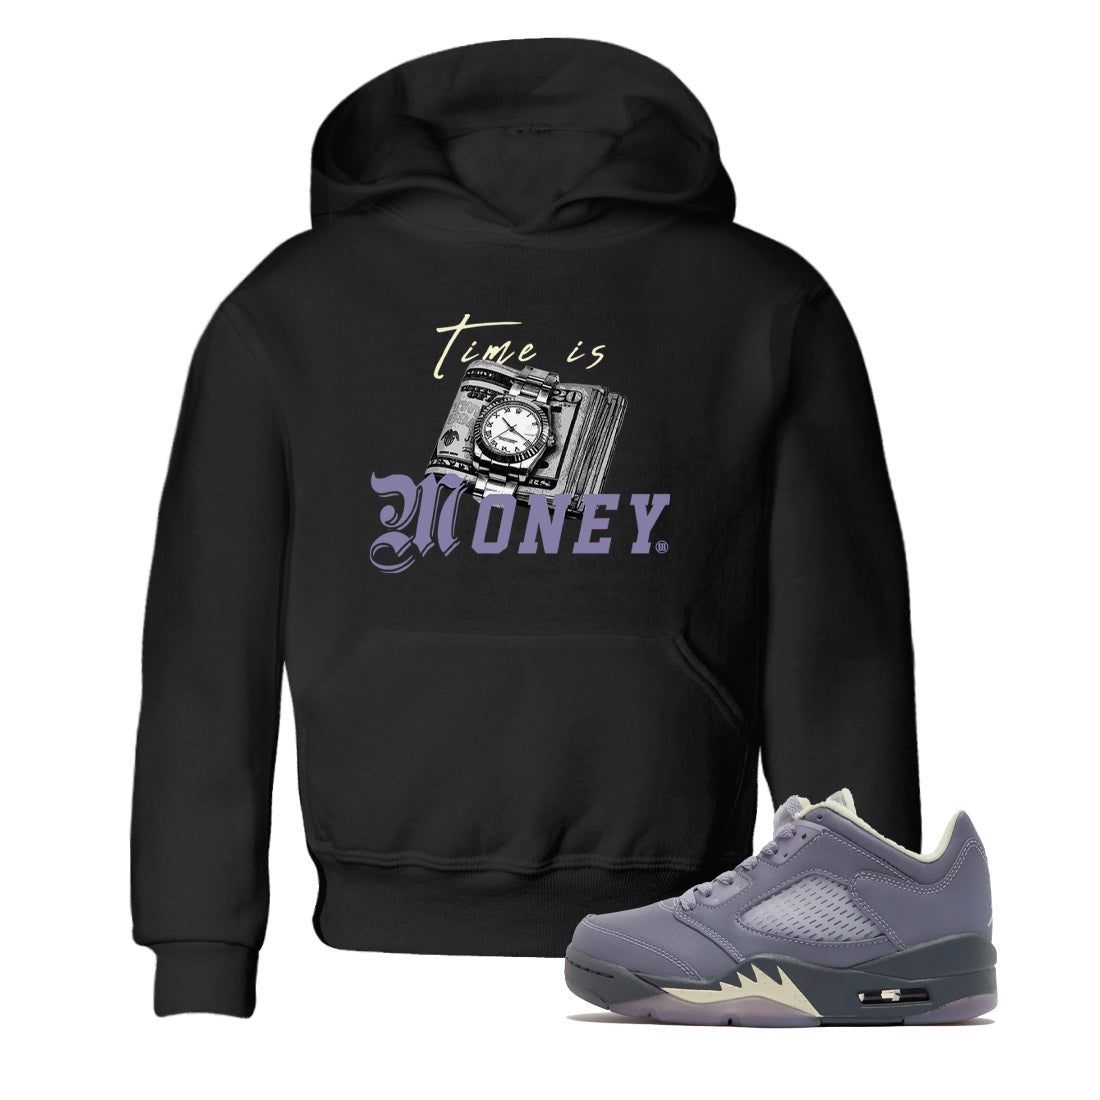 5s Indigo Haze Sneaker Match Tees Time Is Money Sneaker T-Shirt Air Jordan 5 Indigo Haze Sneaker Release Tees Kids Shirts Black 1